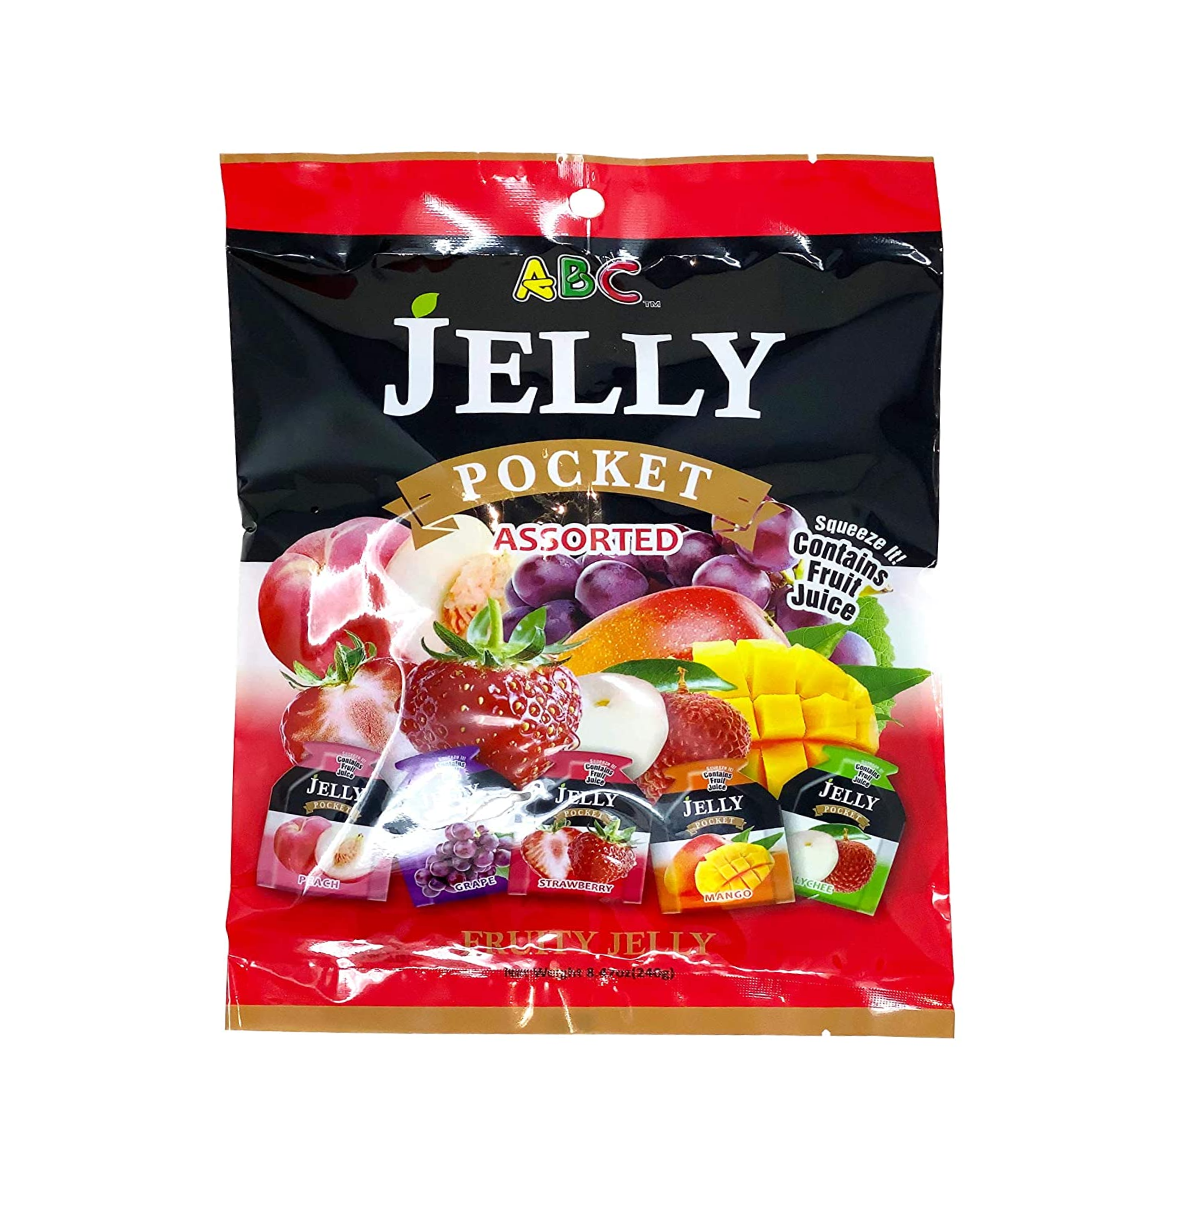 ABC Jelly pocket assorted